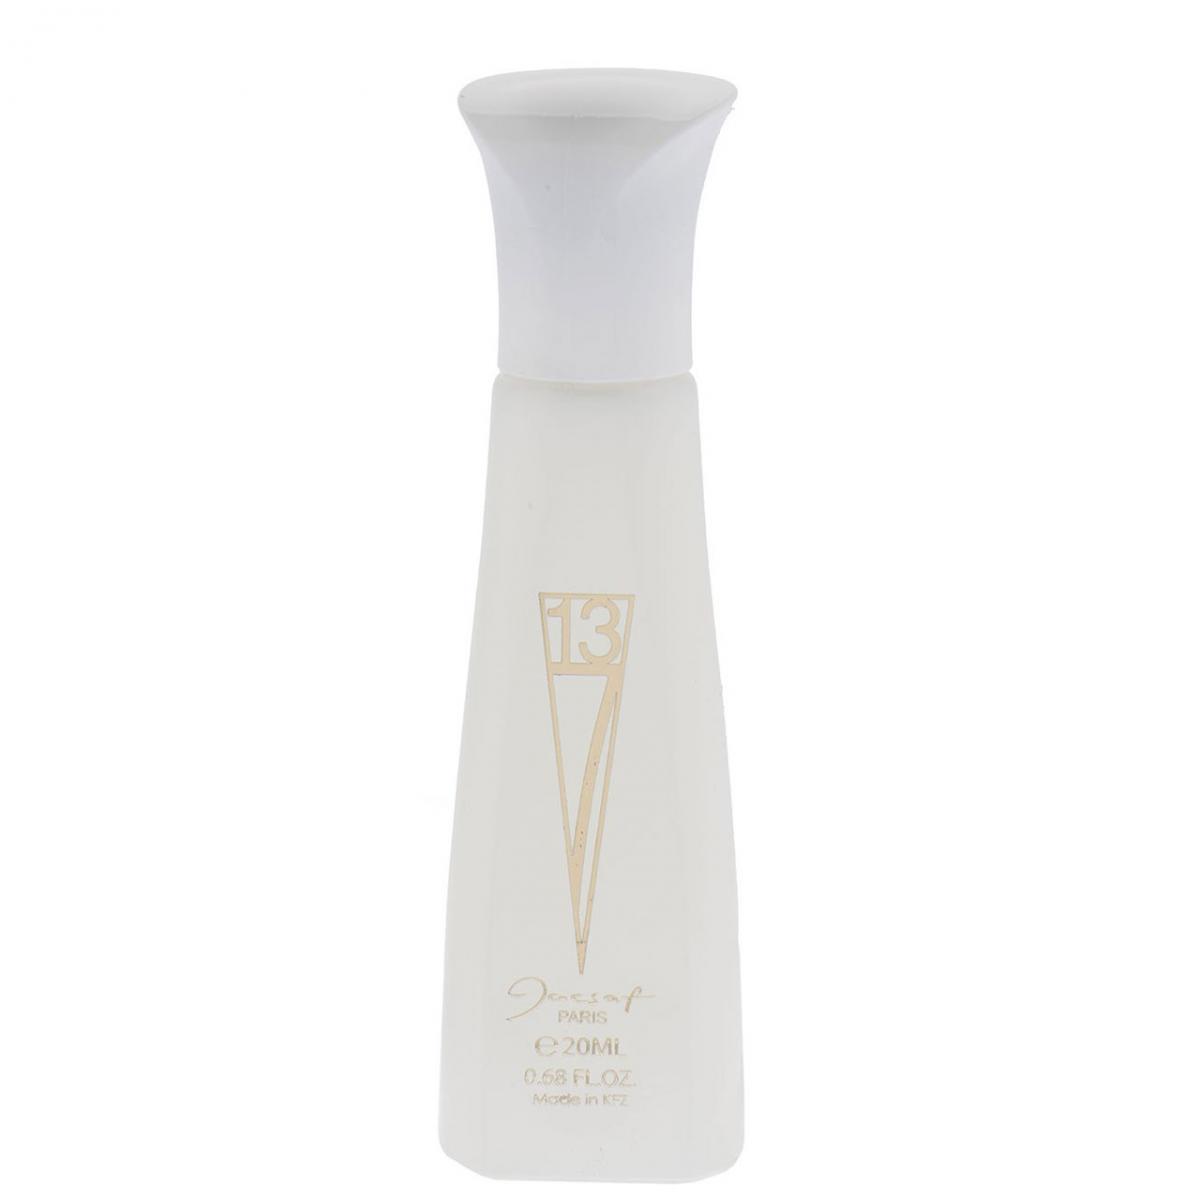 عطر جیبی زنانه مدل 713  -  Jacsaf 713 Eau De Parfum For Women 20ml 